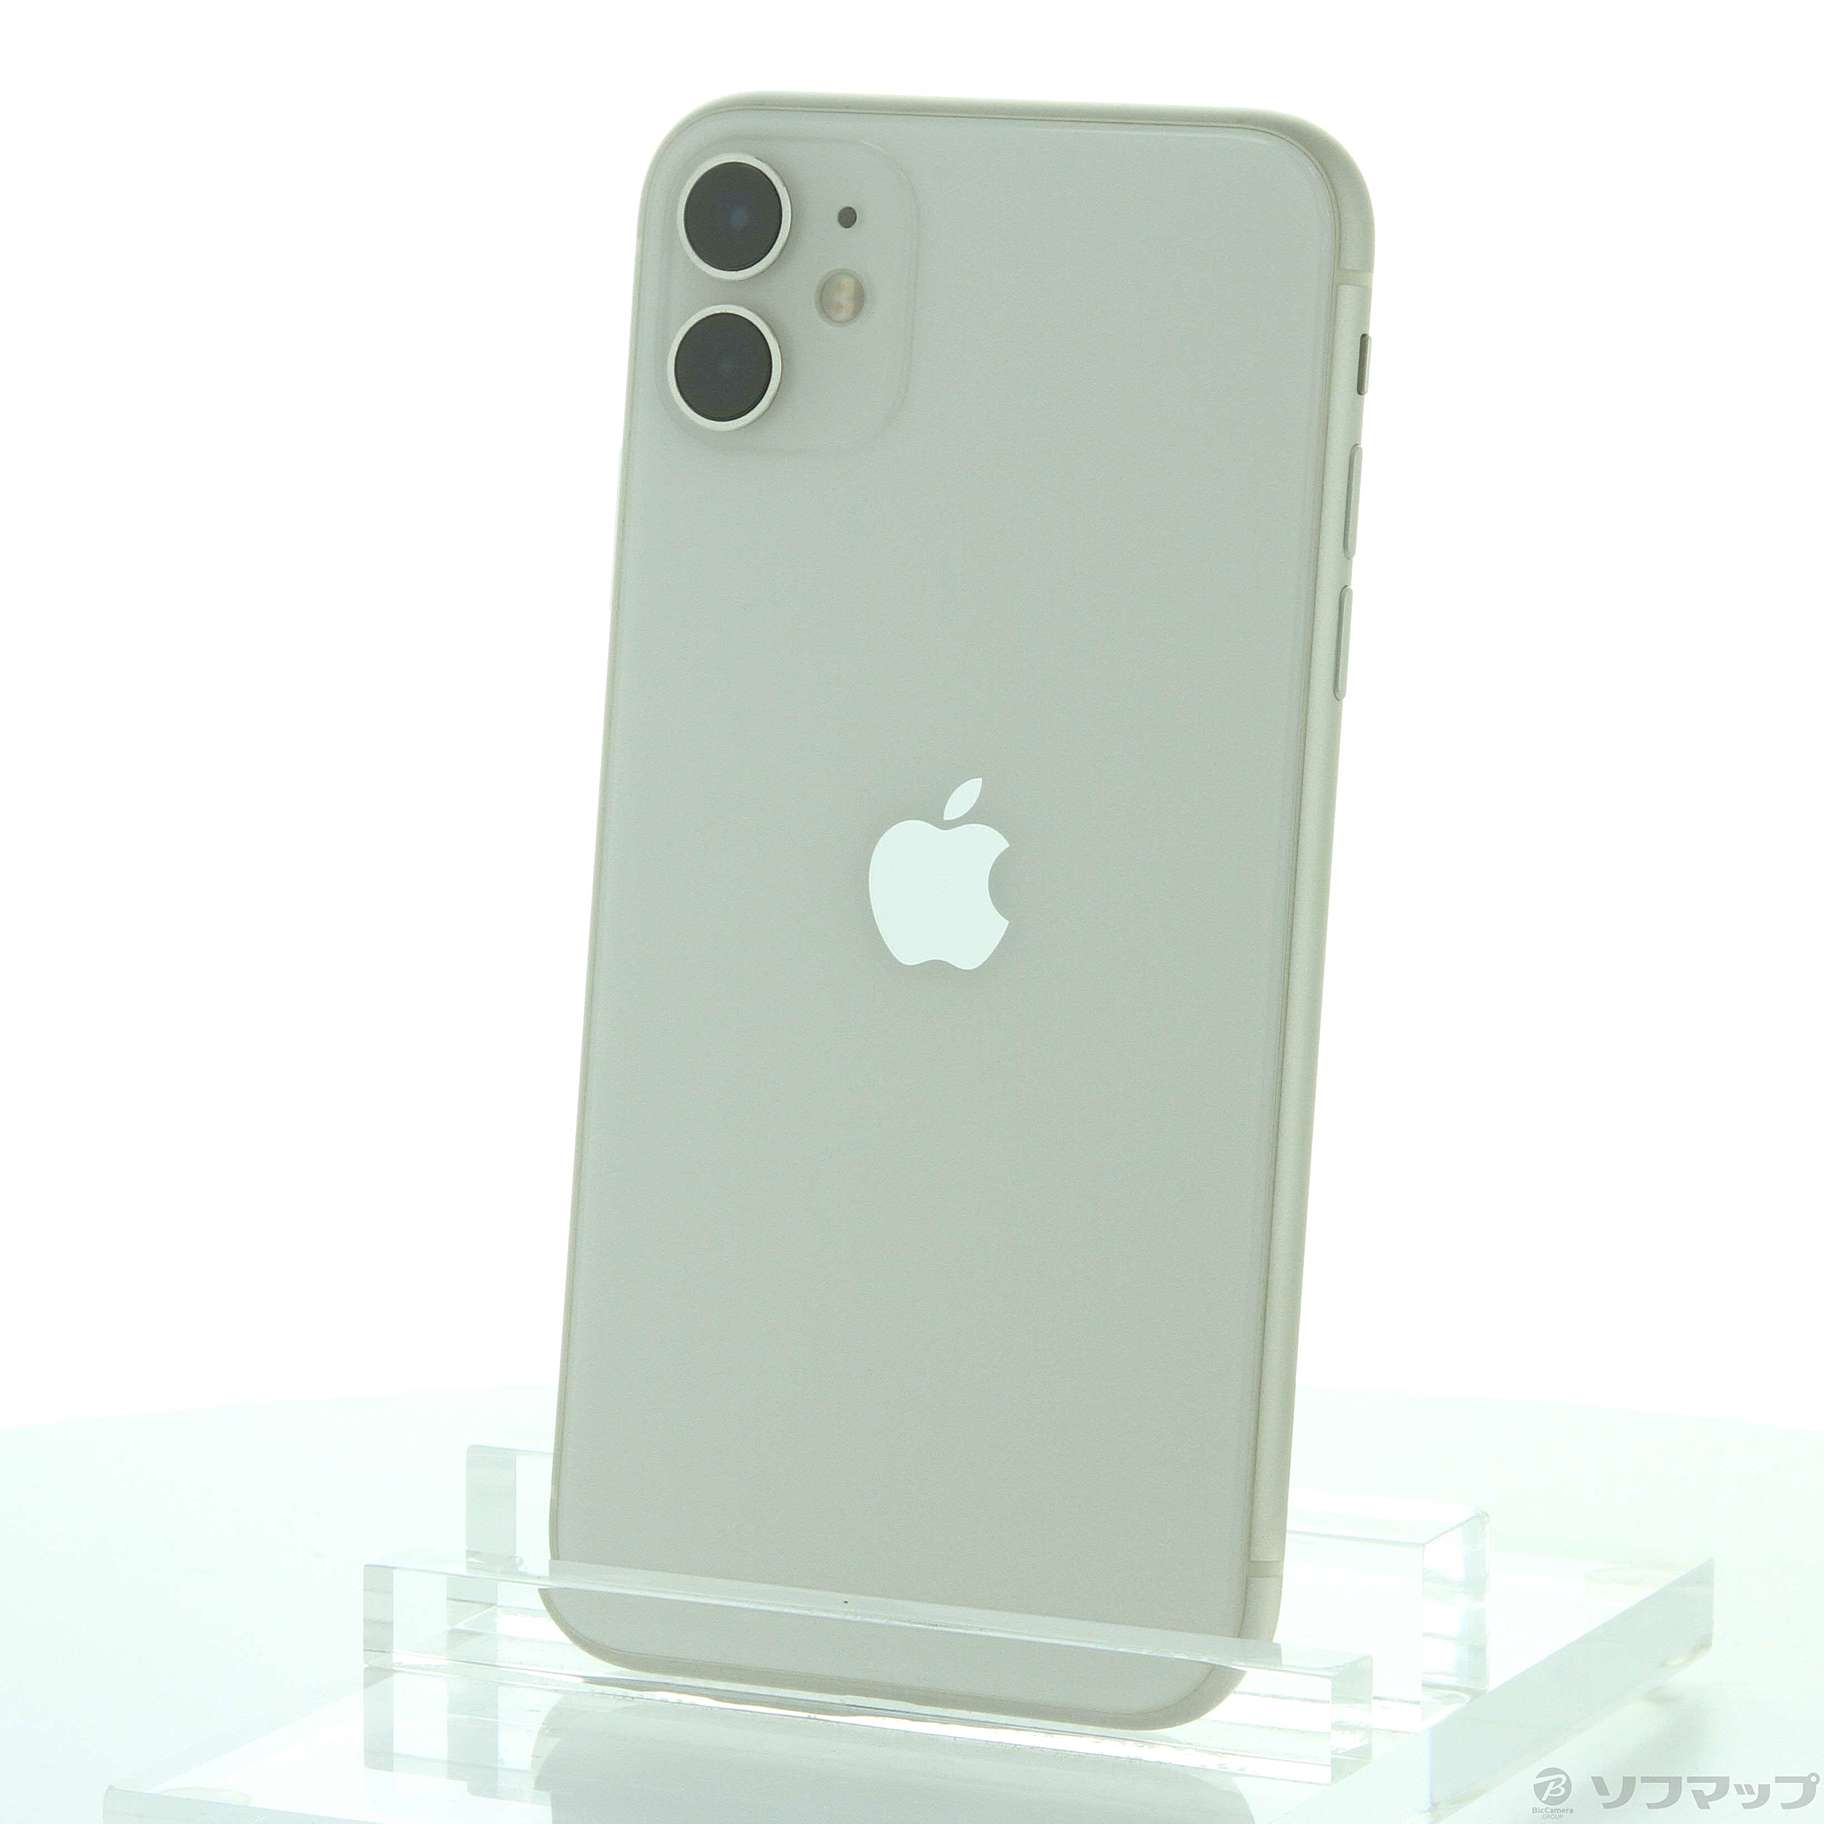 iPhone11 256GB SIMフリー ホワイト - スマートフォン本体